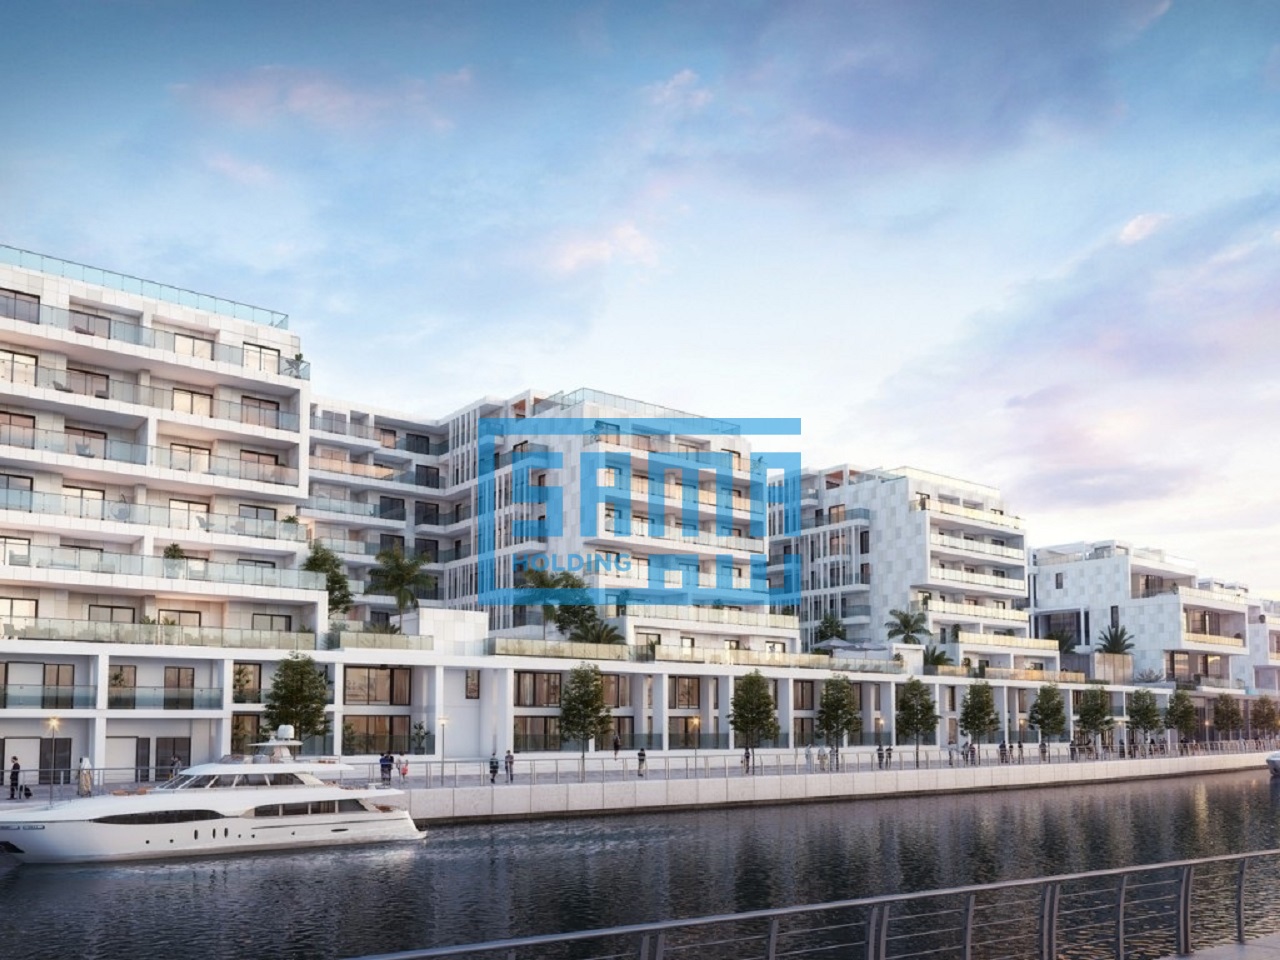 4 Bedrooms Apartment for Sale in Abu Dhabi, Al Raha Beach - Under Construction